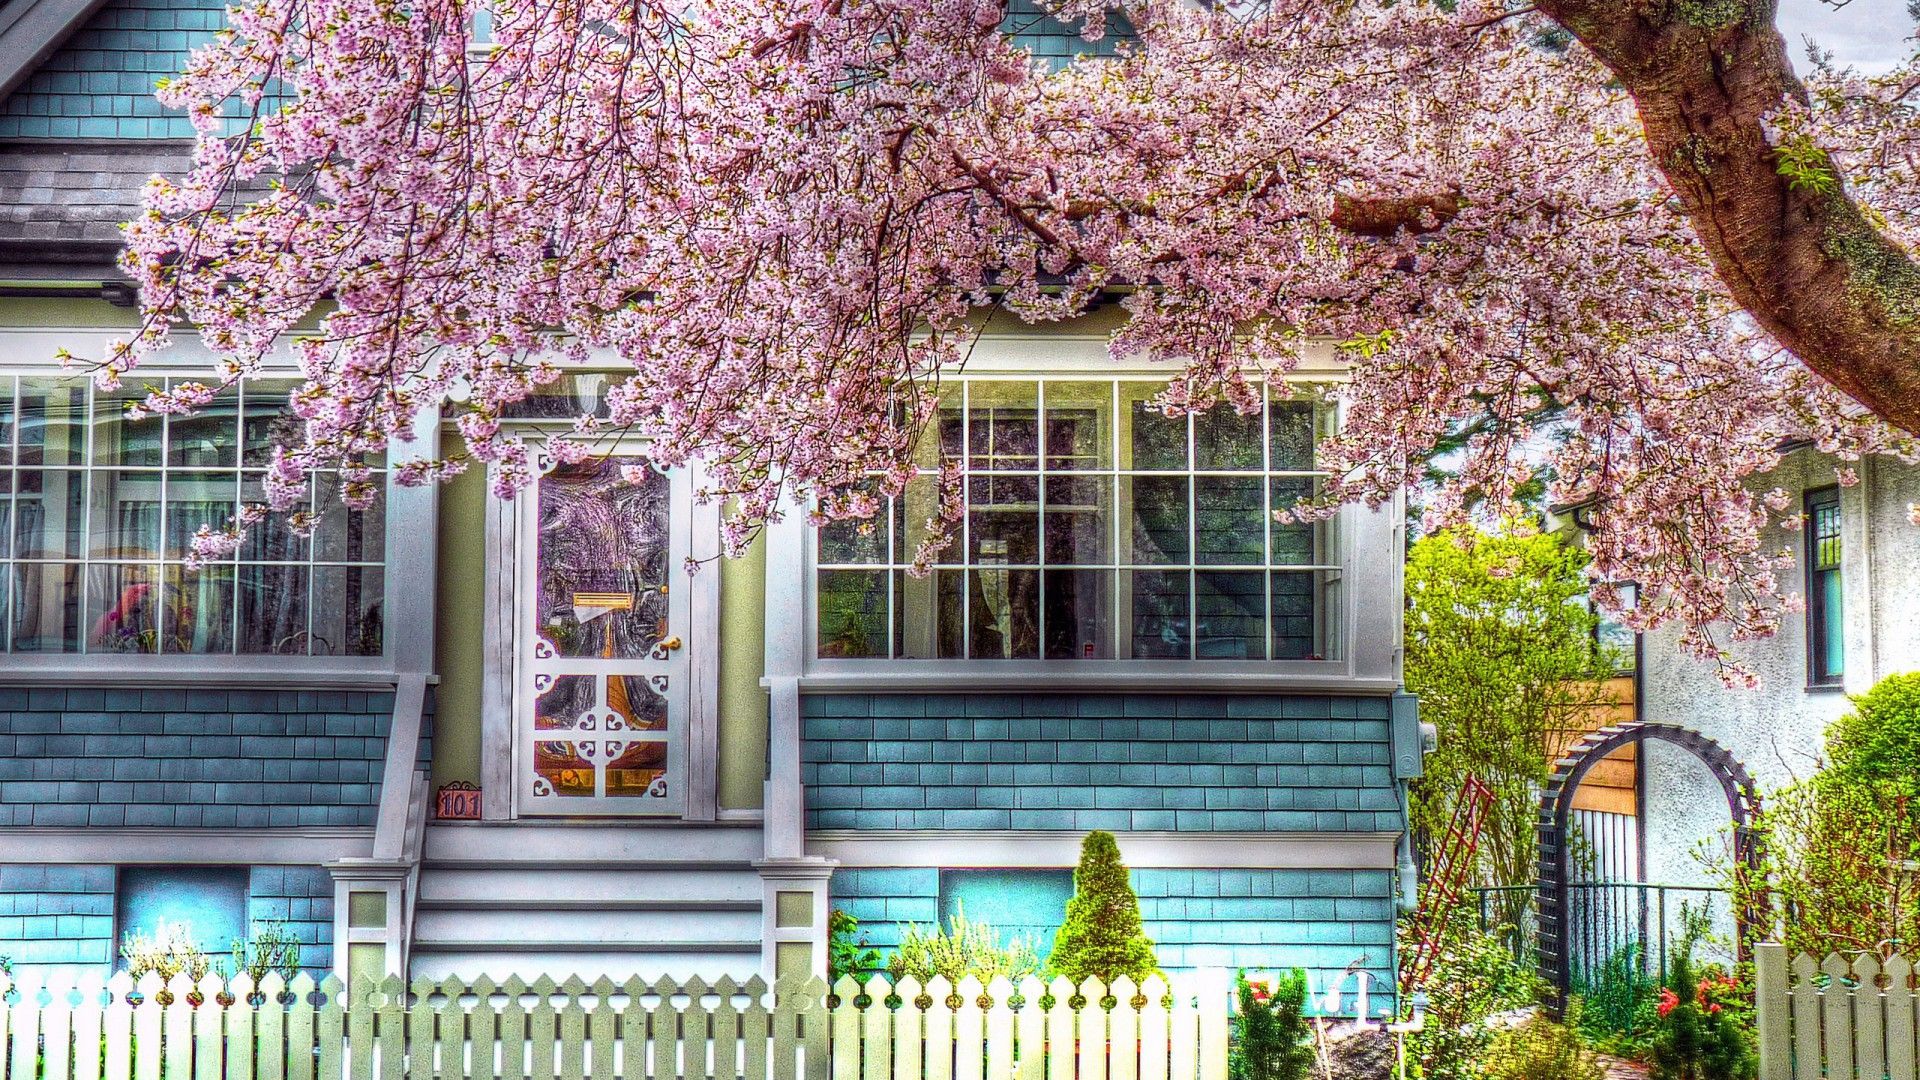 House With Cherry Blossom Tree .wallpapertip.com